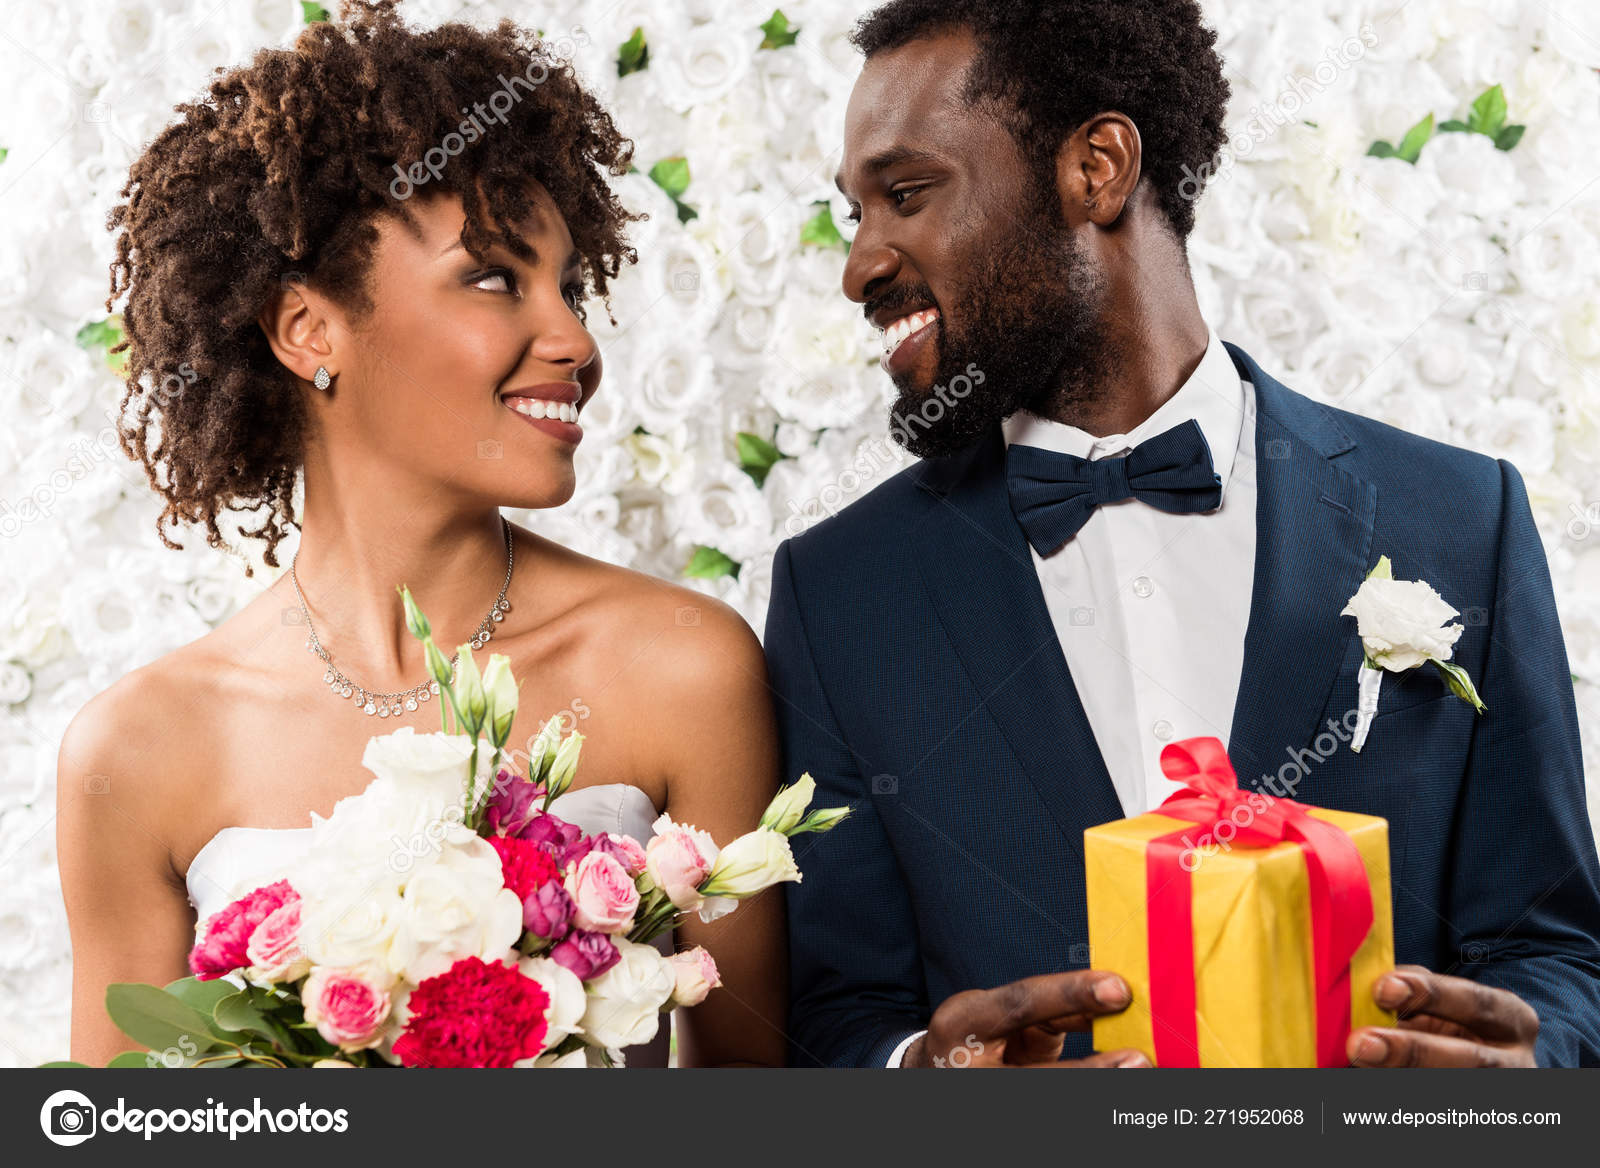 https://st4.depositphotos.com/12982378/27195/i/1600/depositphotos_271952068-stock-photo-cheerful-african-american-bride-holding.jpg